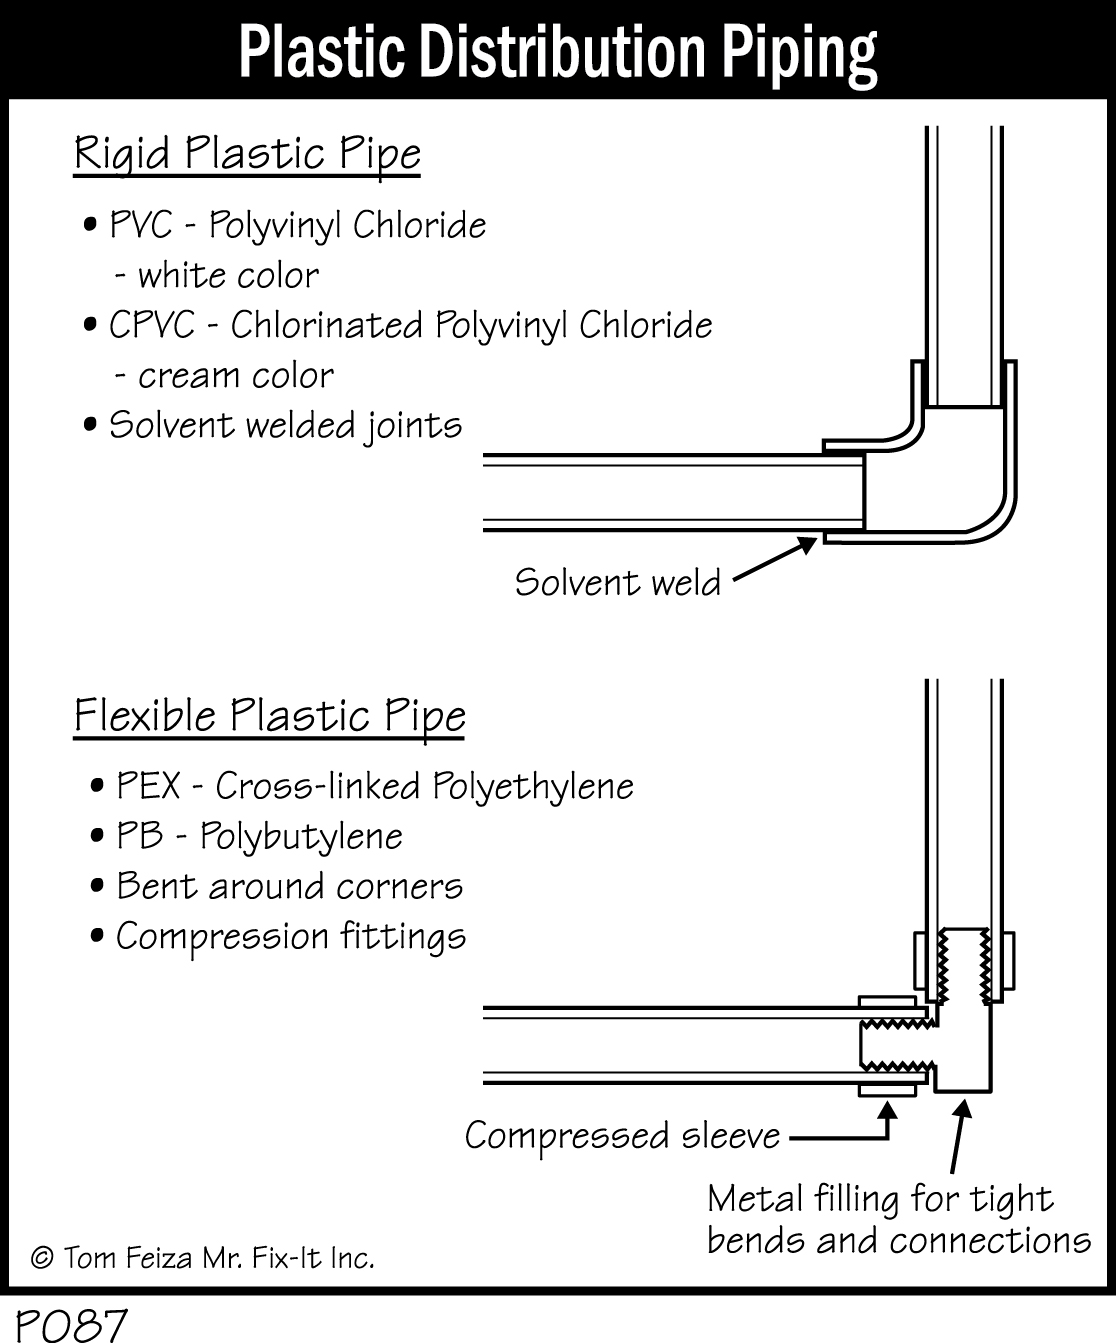 P087 - Plastic Distribution Piping